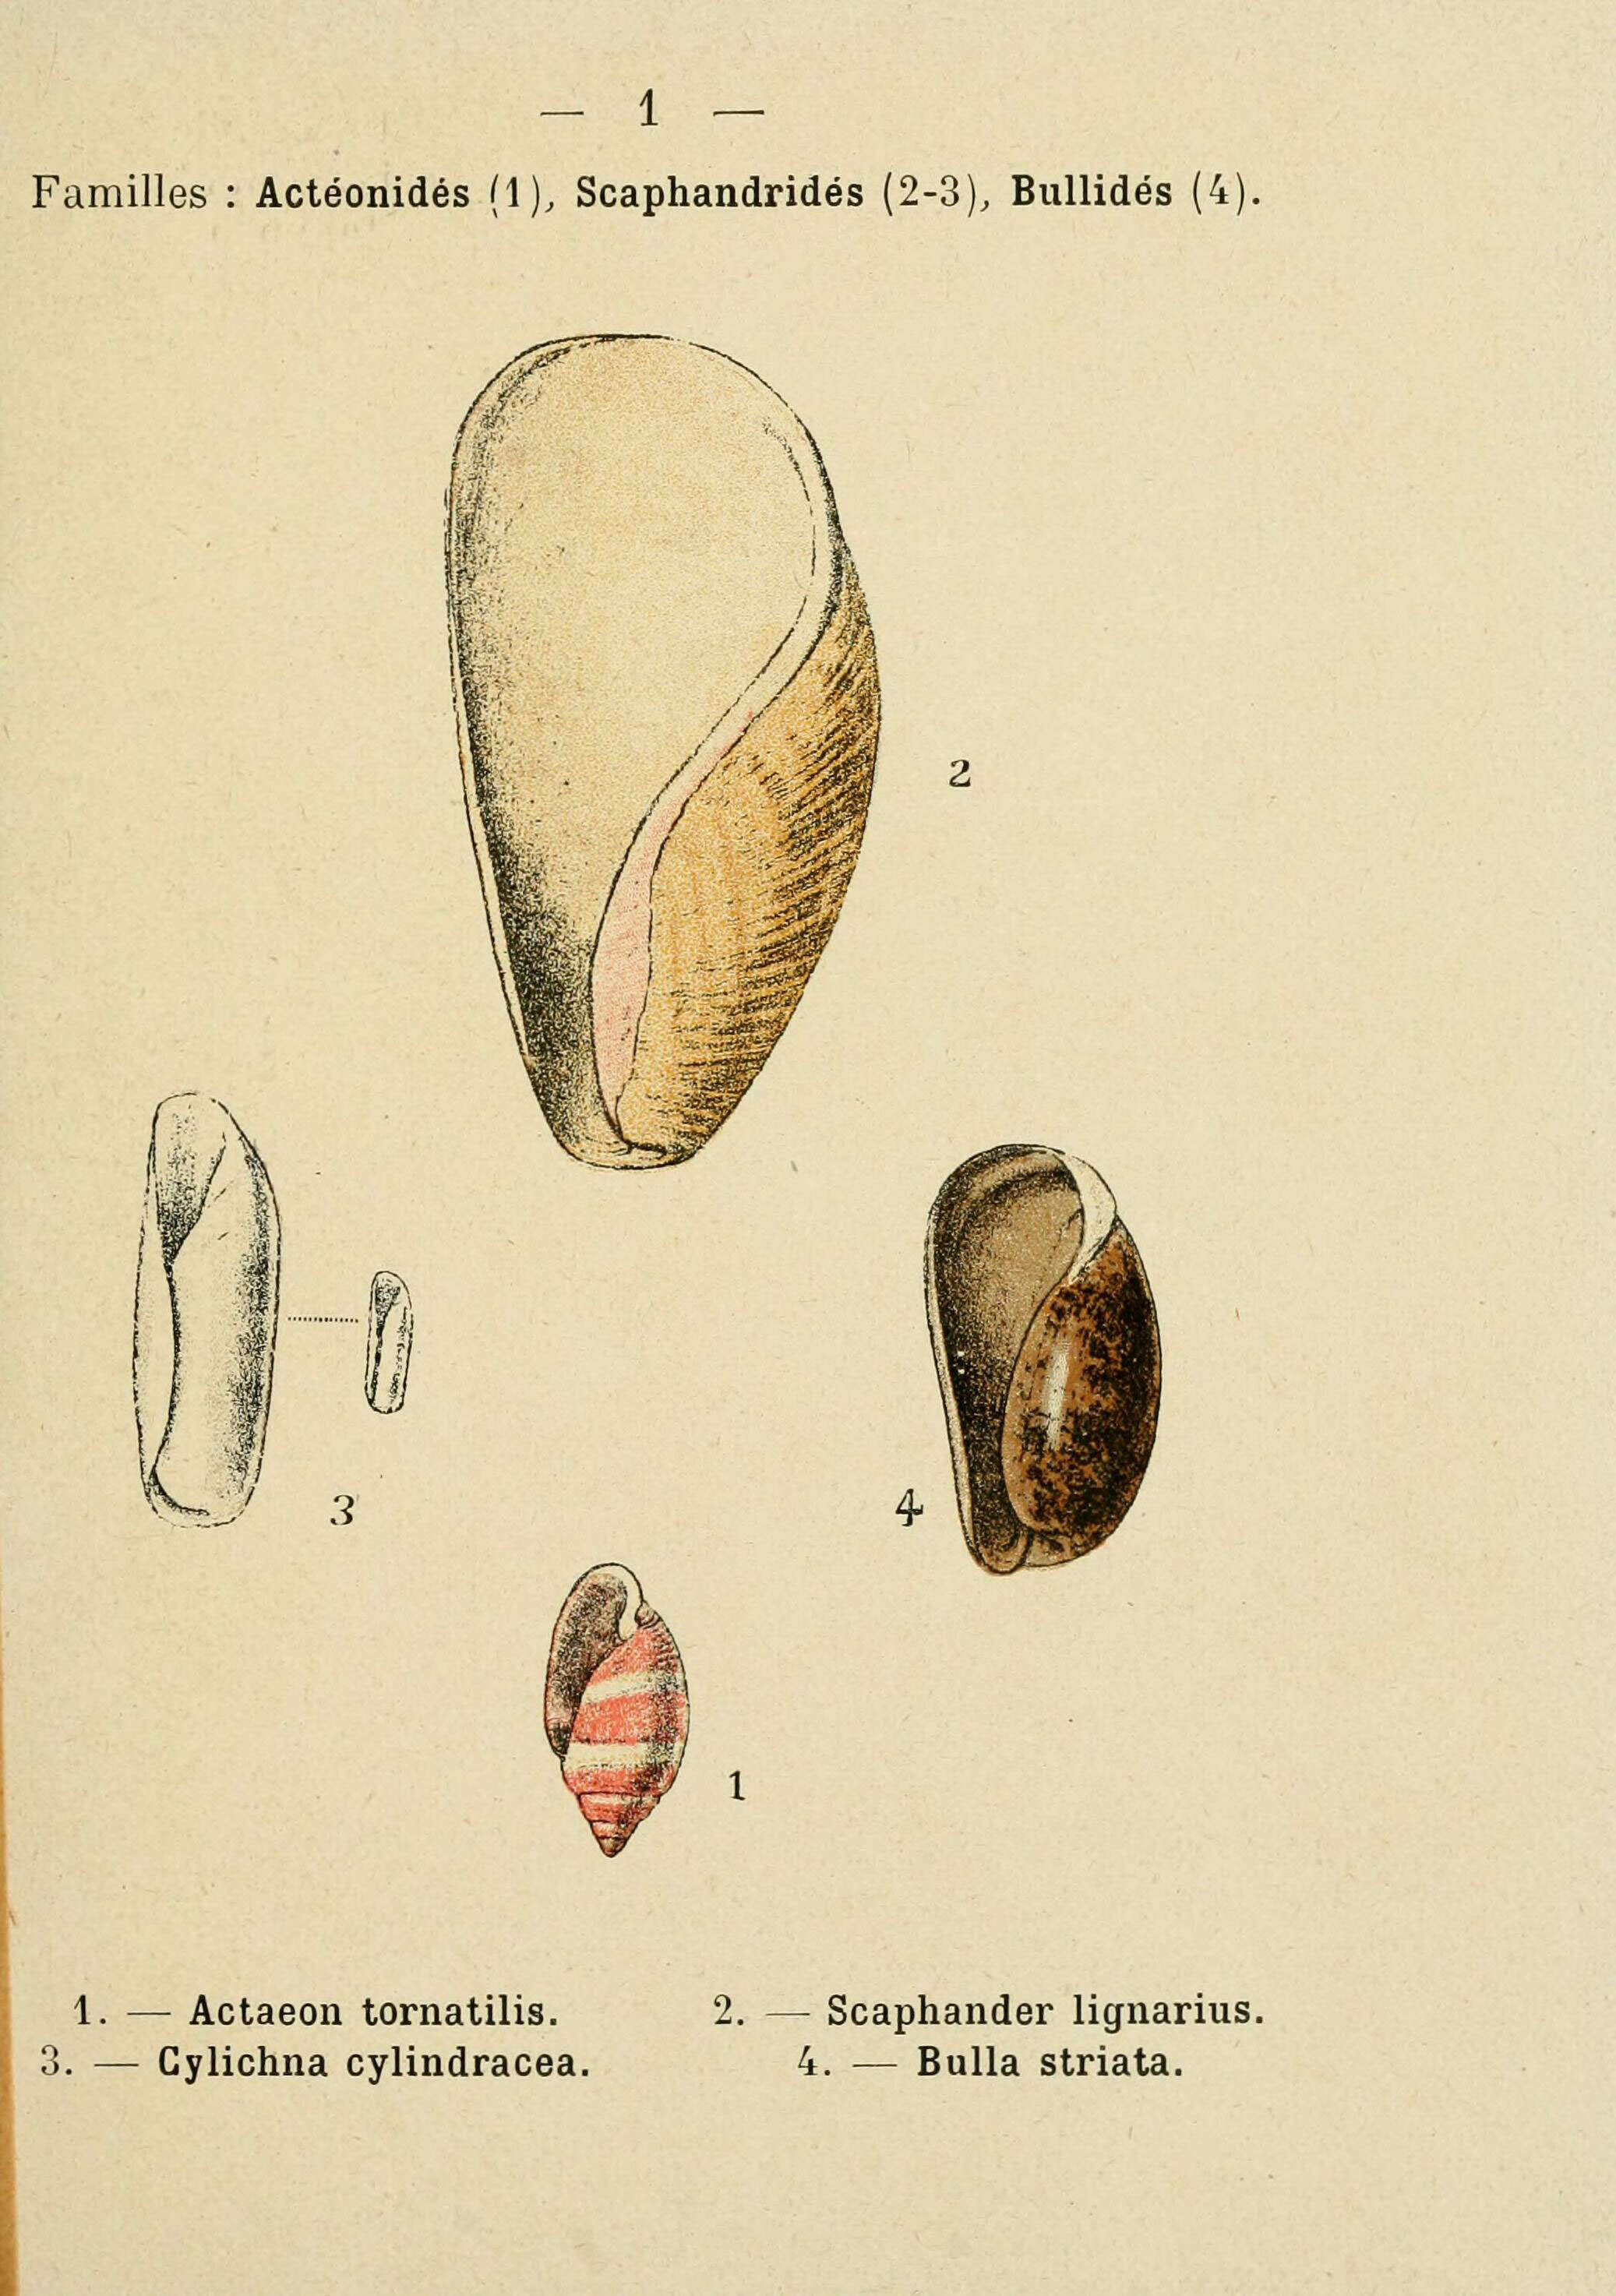 Image de Cylichna cylindracea (Pennant 1777)